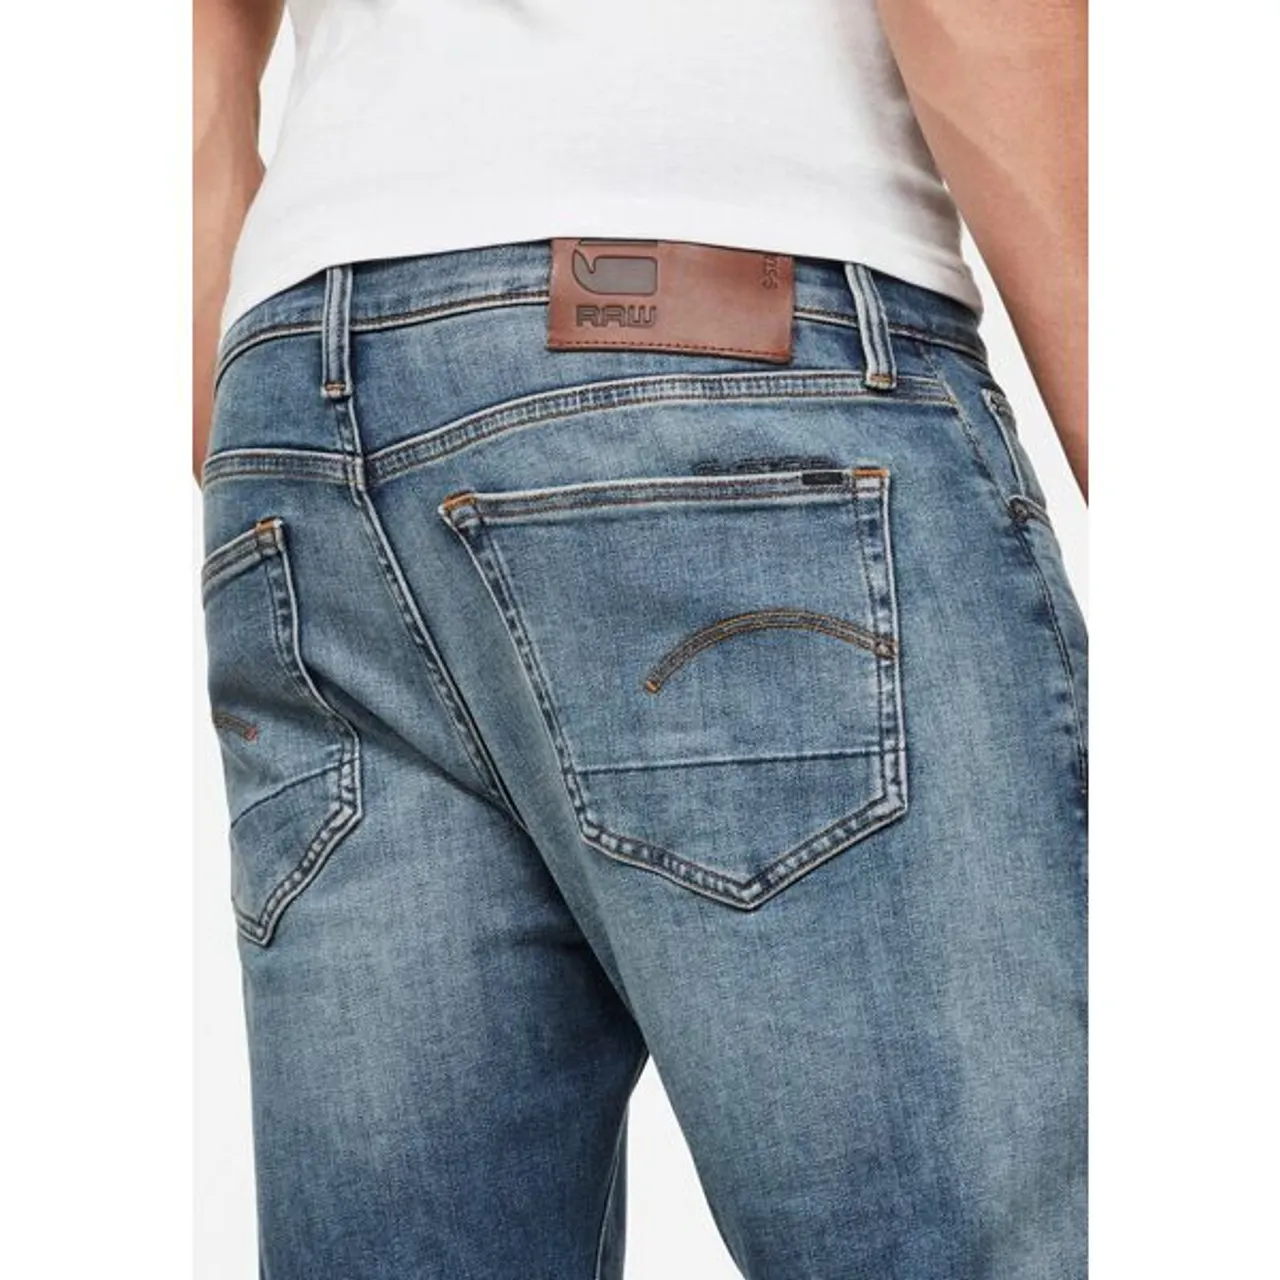 Slim-fit-Jeans G-STAR RAW "3301 Slim" Gr. 34, Länge 32, blau (blue) Herren Jeans Slim Fit